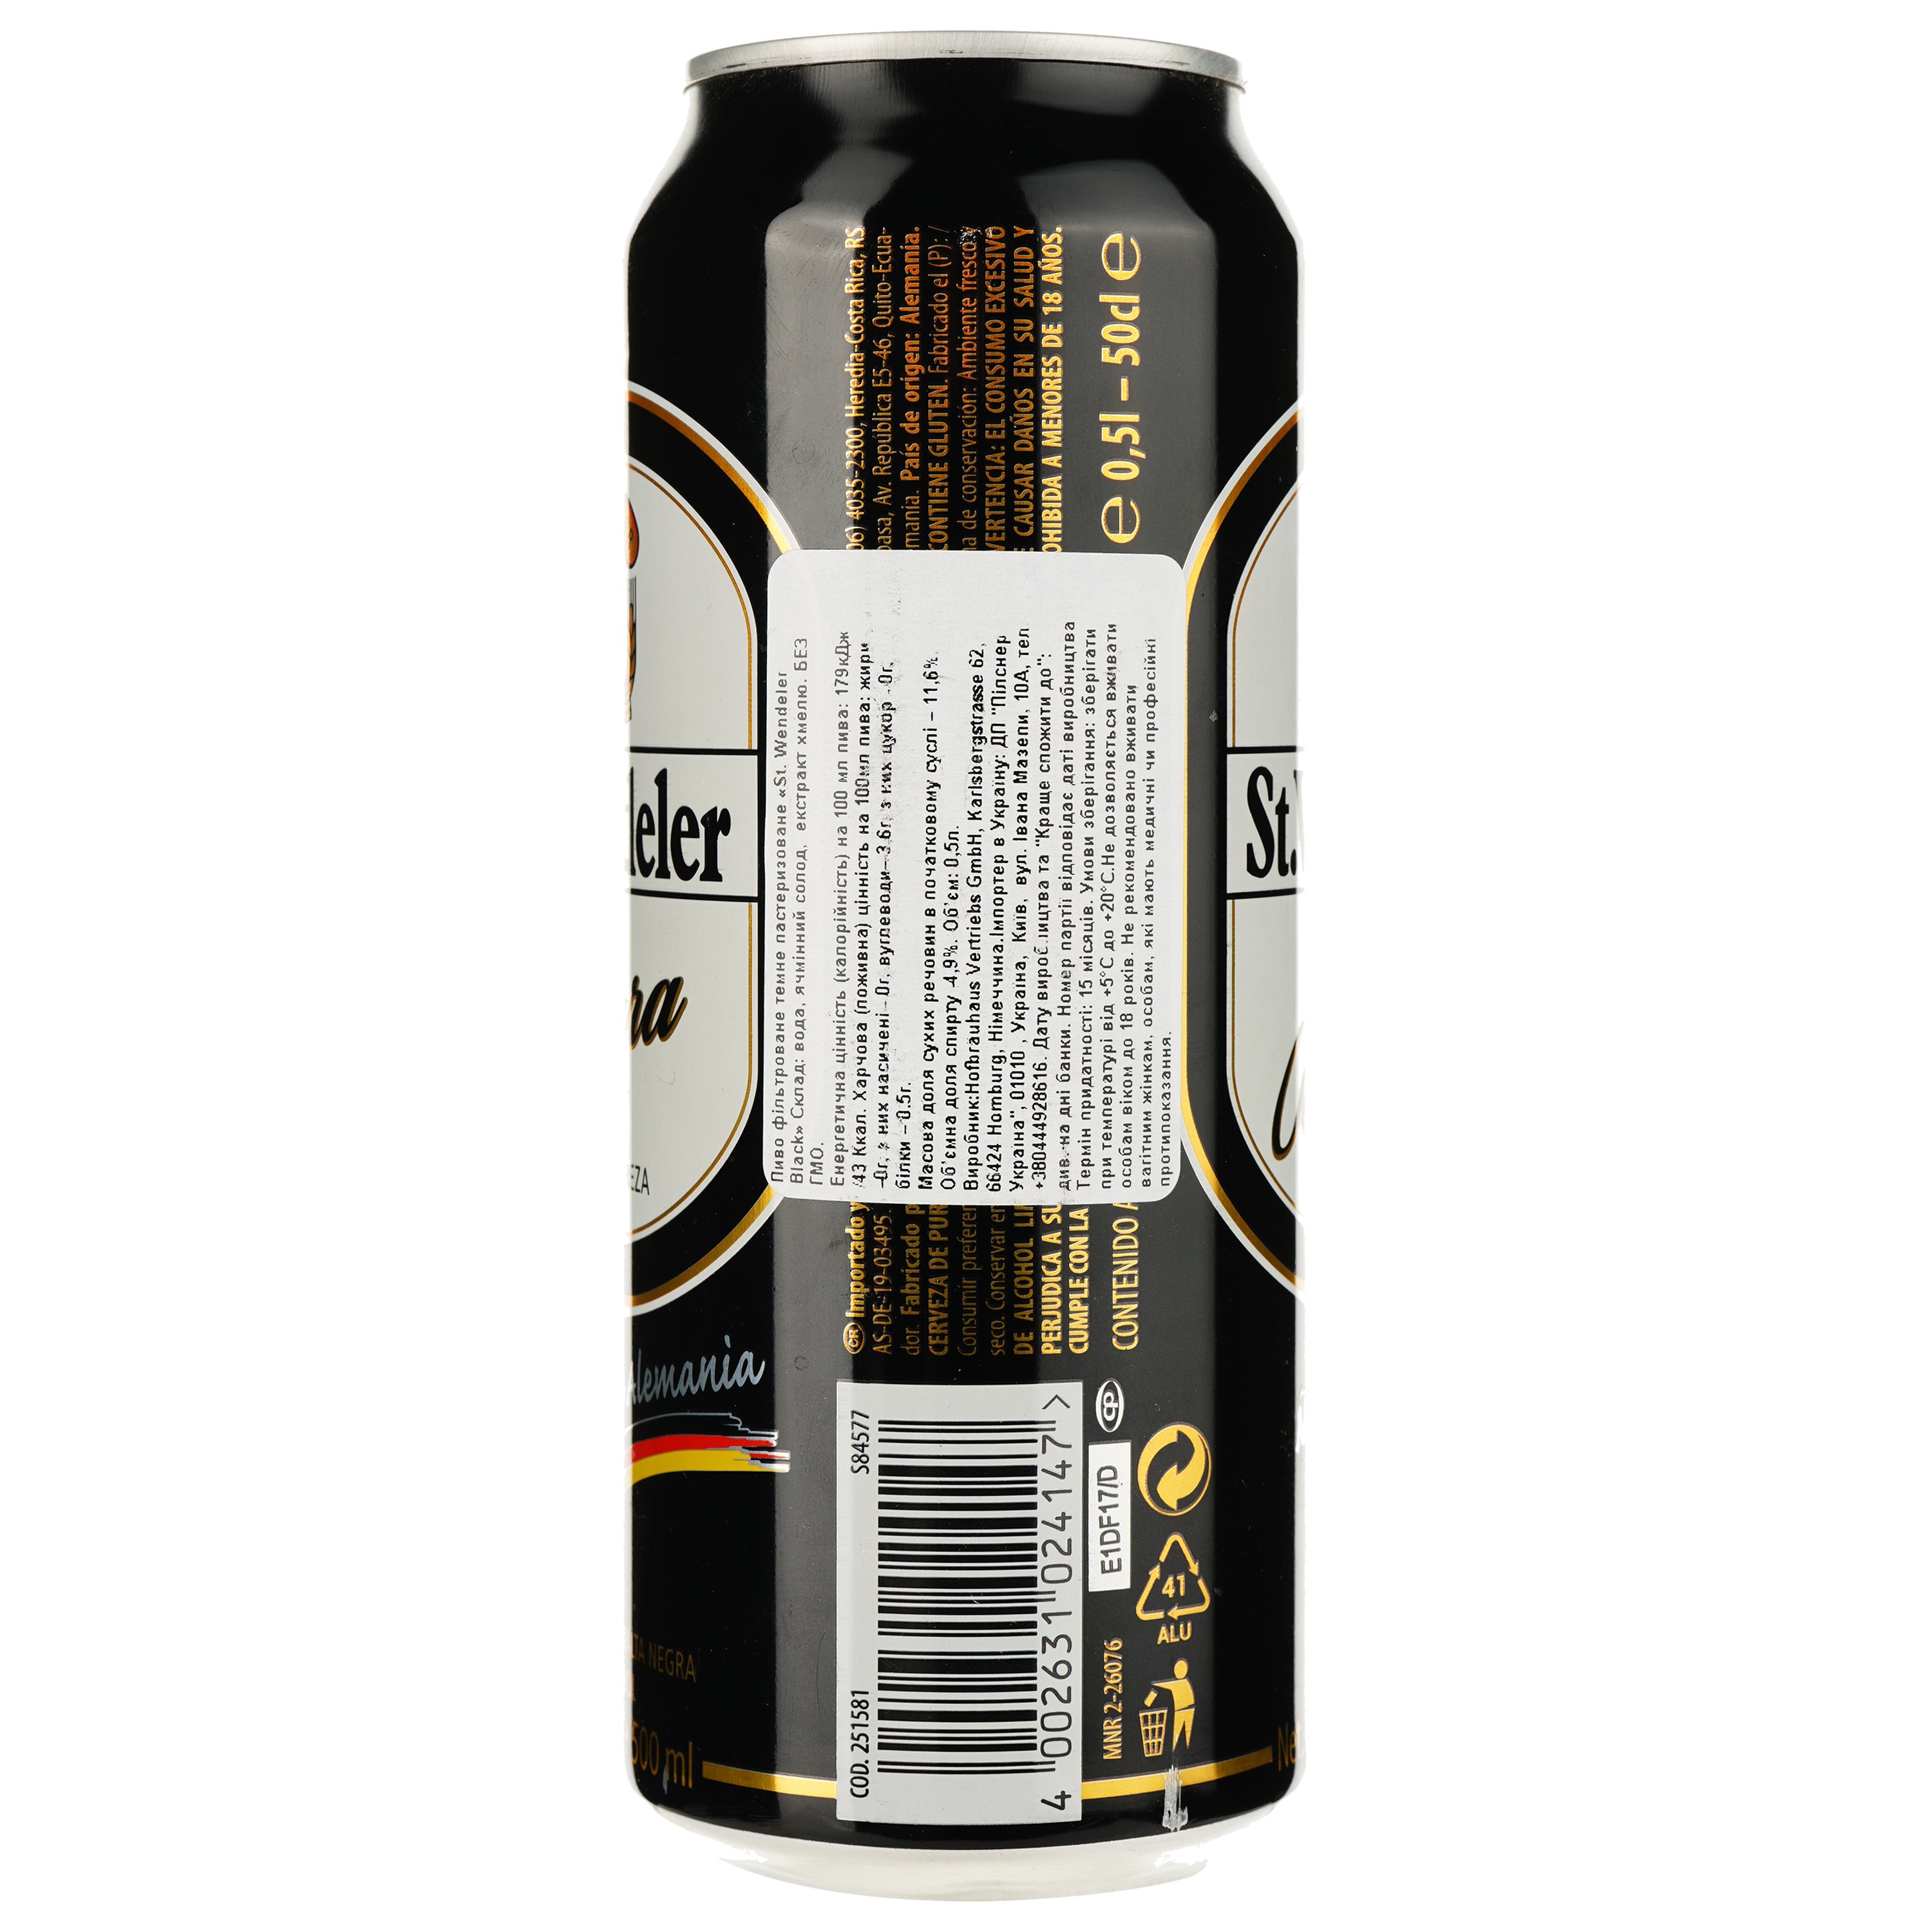 Пиво St.Wendeler Black темное 4.9% 0.5 л ж/б - фото 2